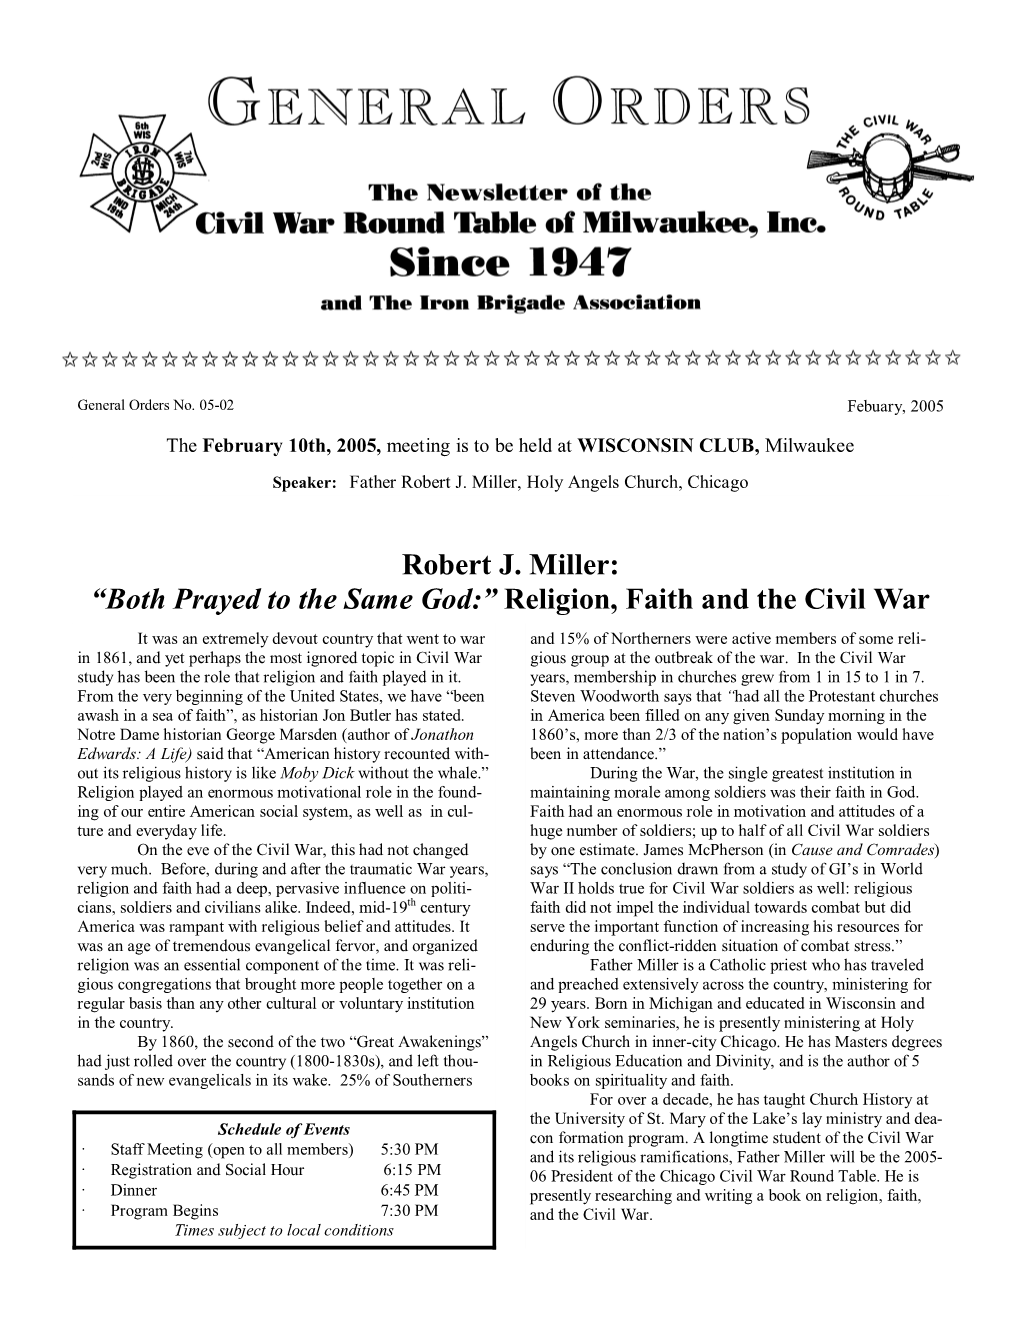 Robert J. Miller: “Both Prayed to the Same God:” Religion, Faith and The